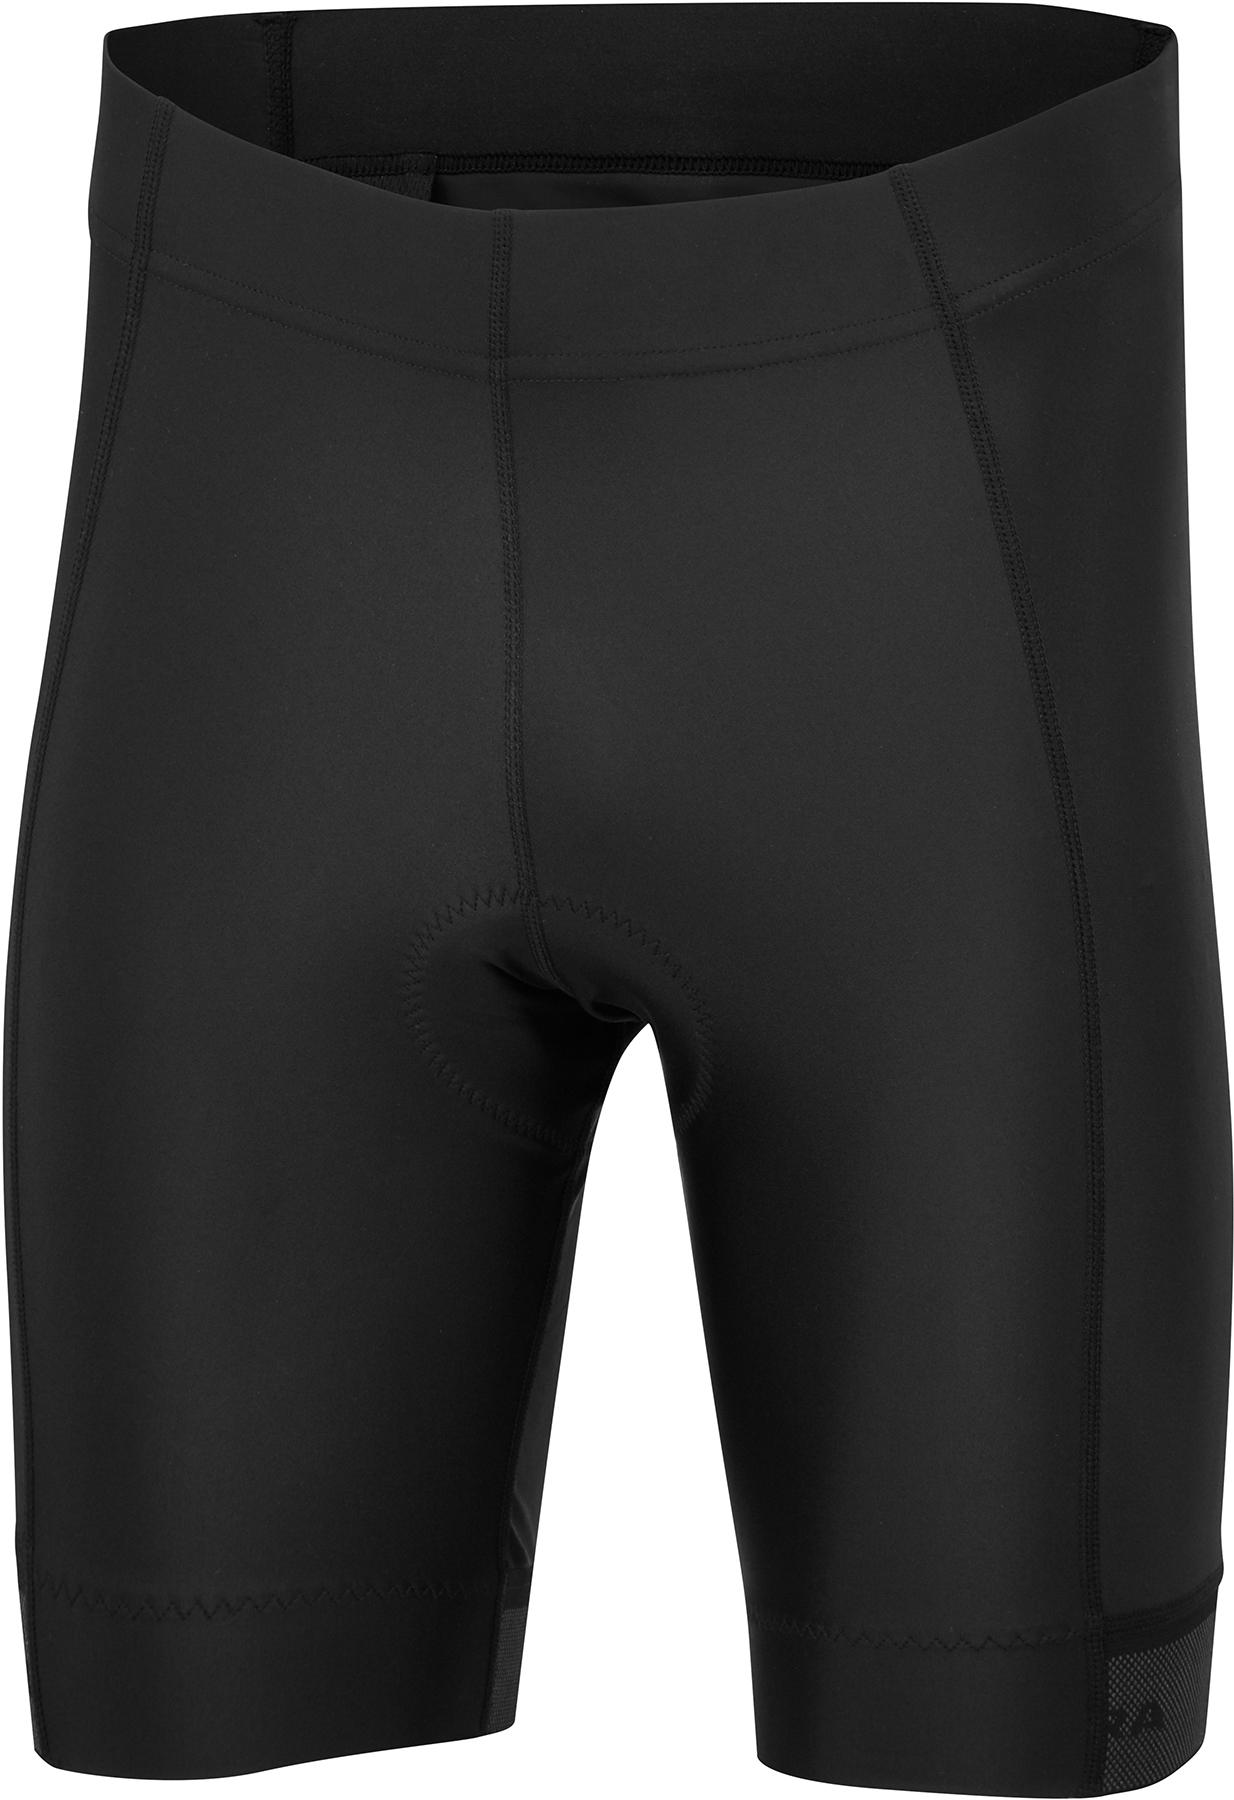 Altura Progel Plus Cycling Waist Shorts - Black